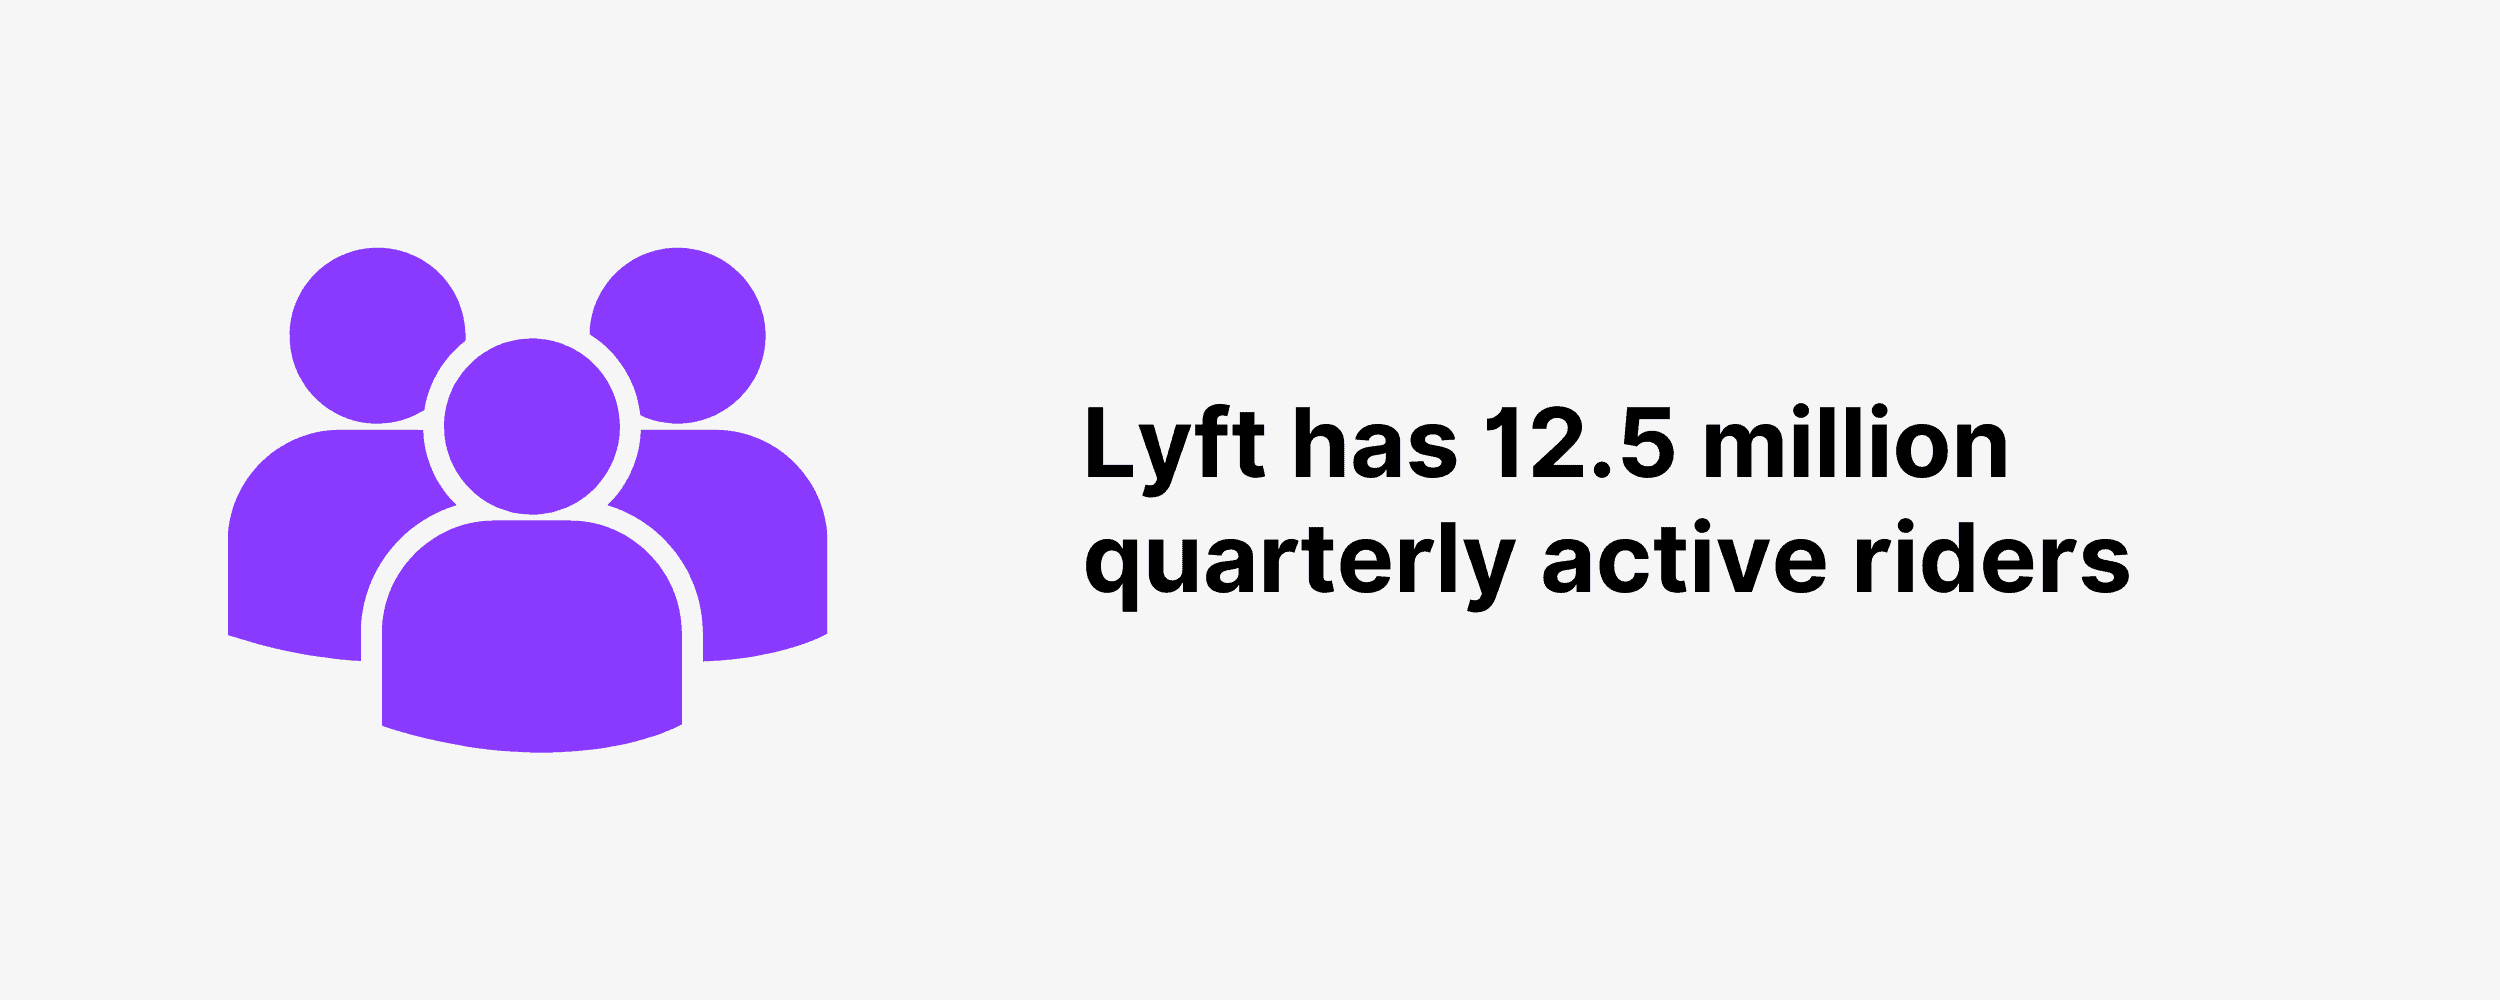 Lyft has 12.5 million quarterly active riders